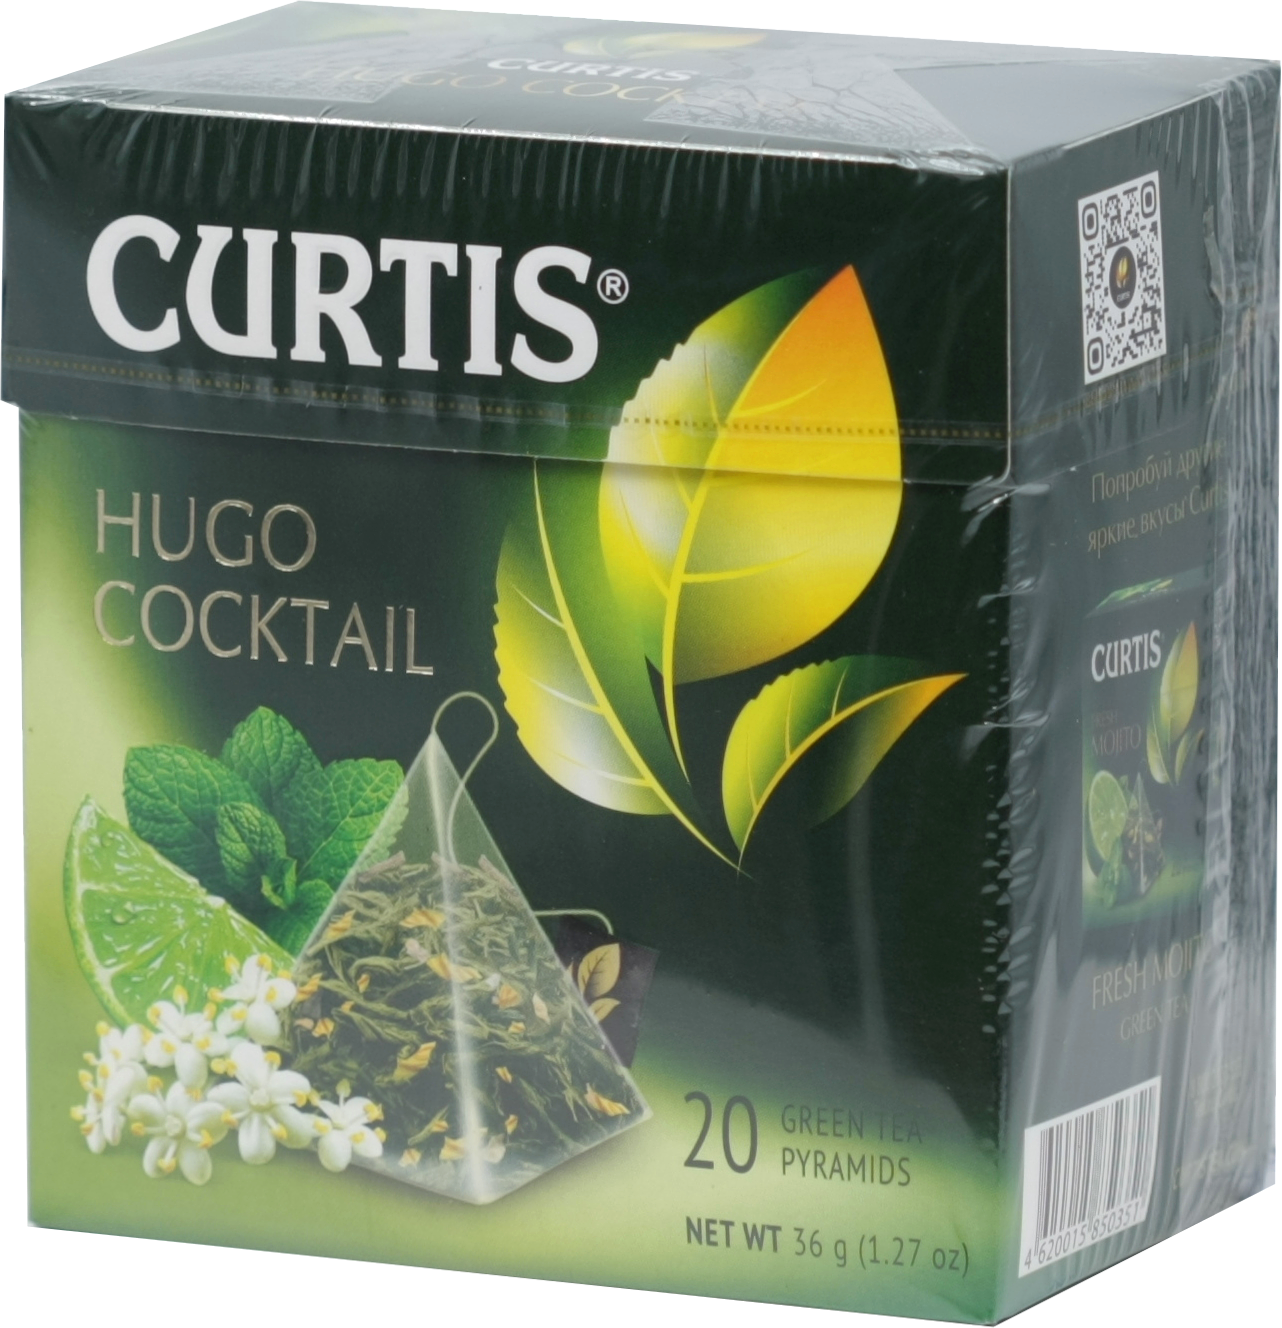 Curtis cocktail. Кертис Hugo Cocktail зеленый чай 20 пир. Кертис чай зеленый вкусы. Чай Кертис Хуго коктейль. Зеленый чай Куртис с Мохито.